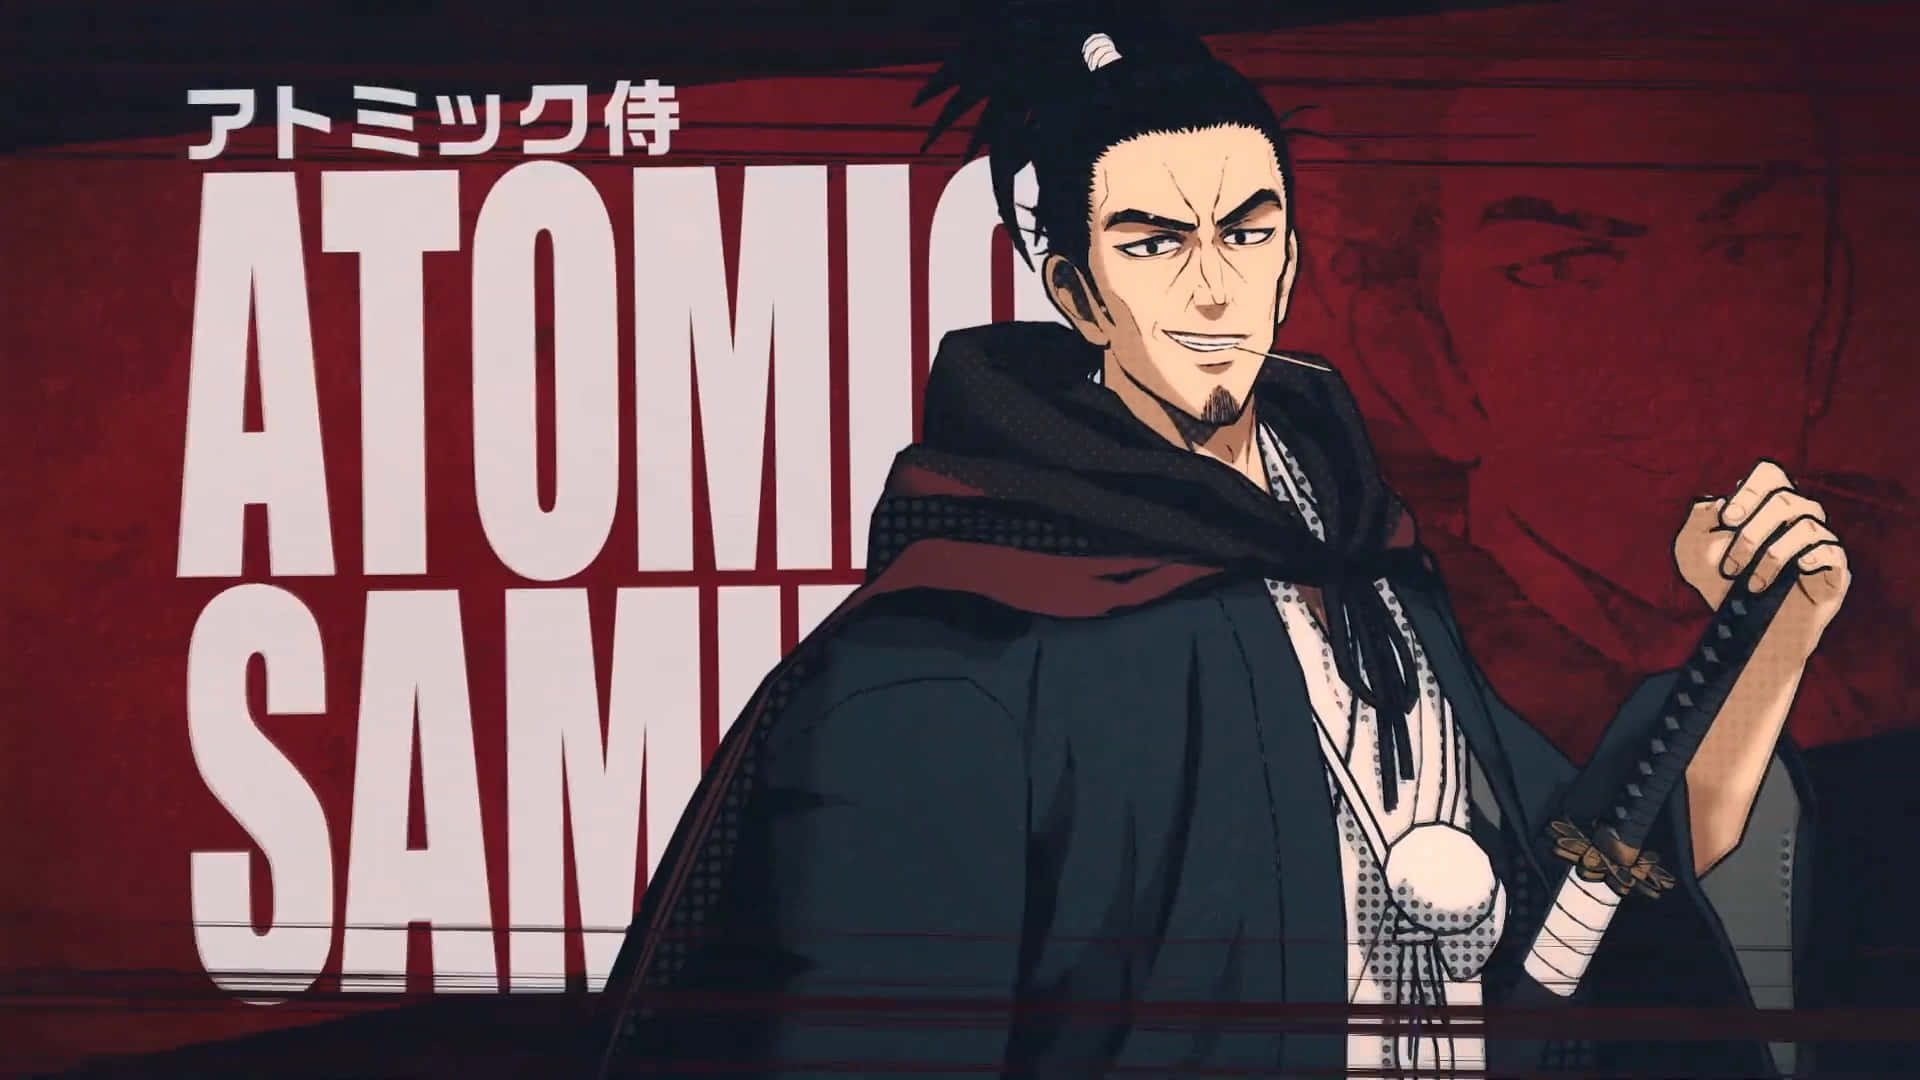 Caption: Atomic Samurai - Master Swordsman in Action Wallpaper